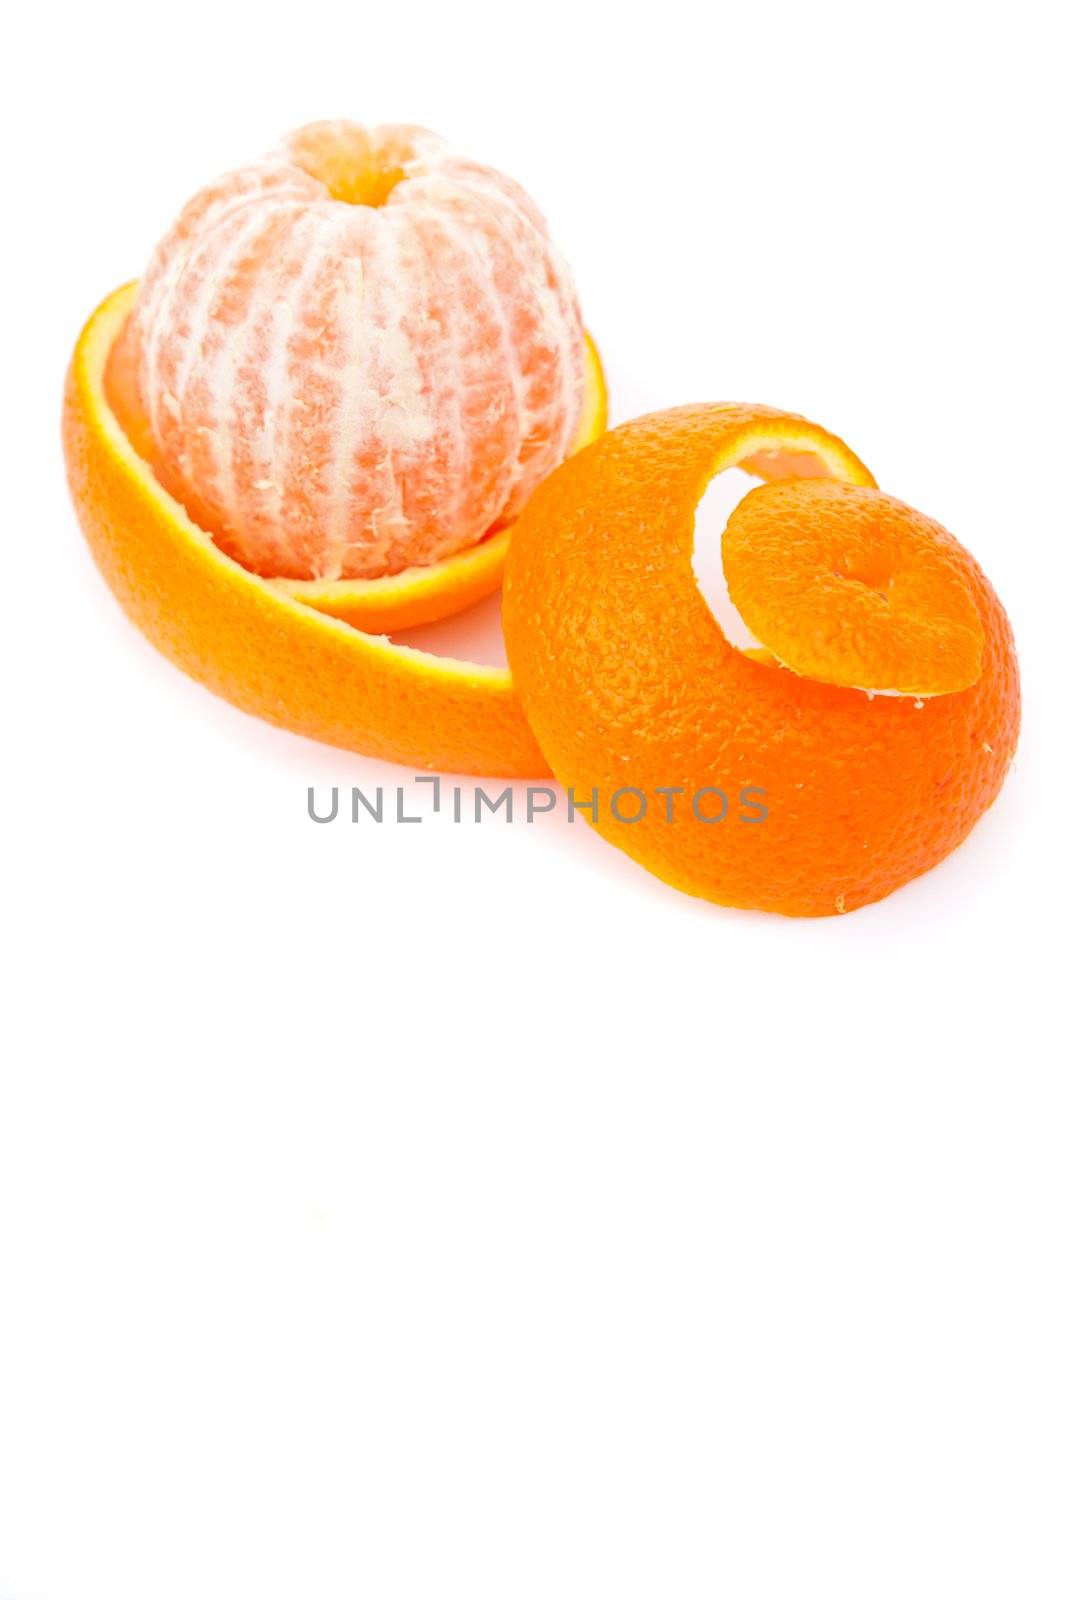 Orange surrounded by an orange peel against white background